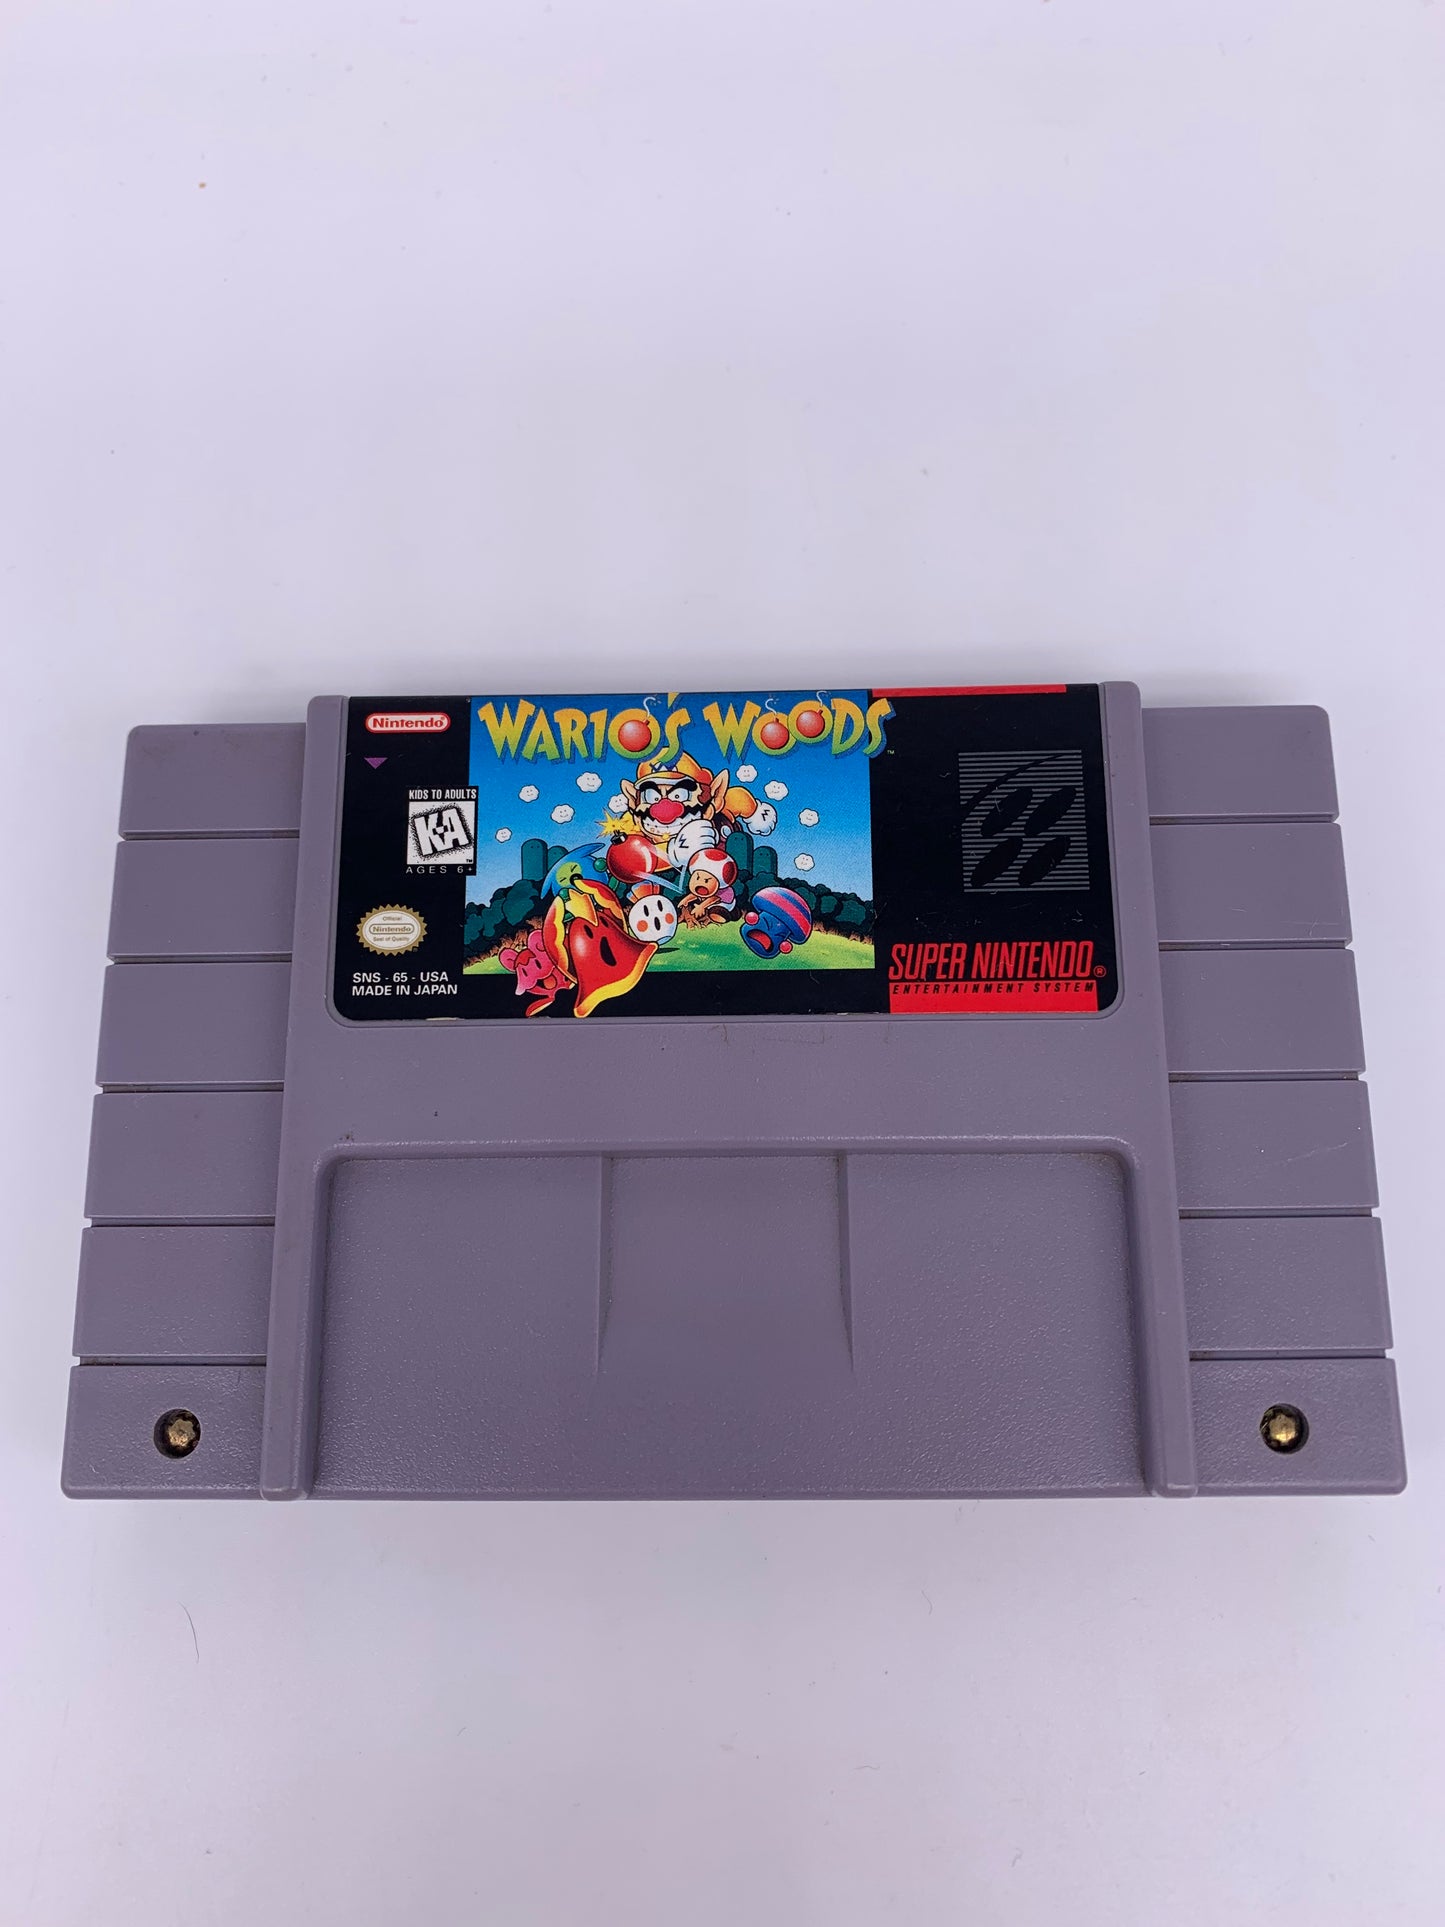 PiXEL-RETRO.COM : SUPER NINTENDO NES (SNES) GAME NTSC WARIO'S WOODS